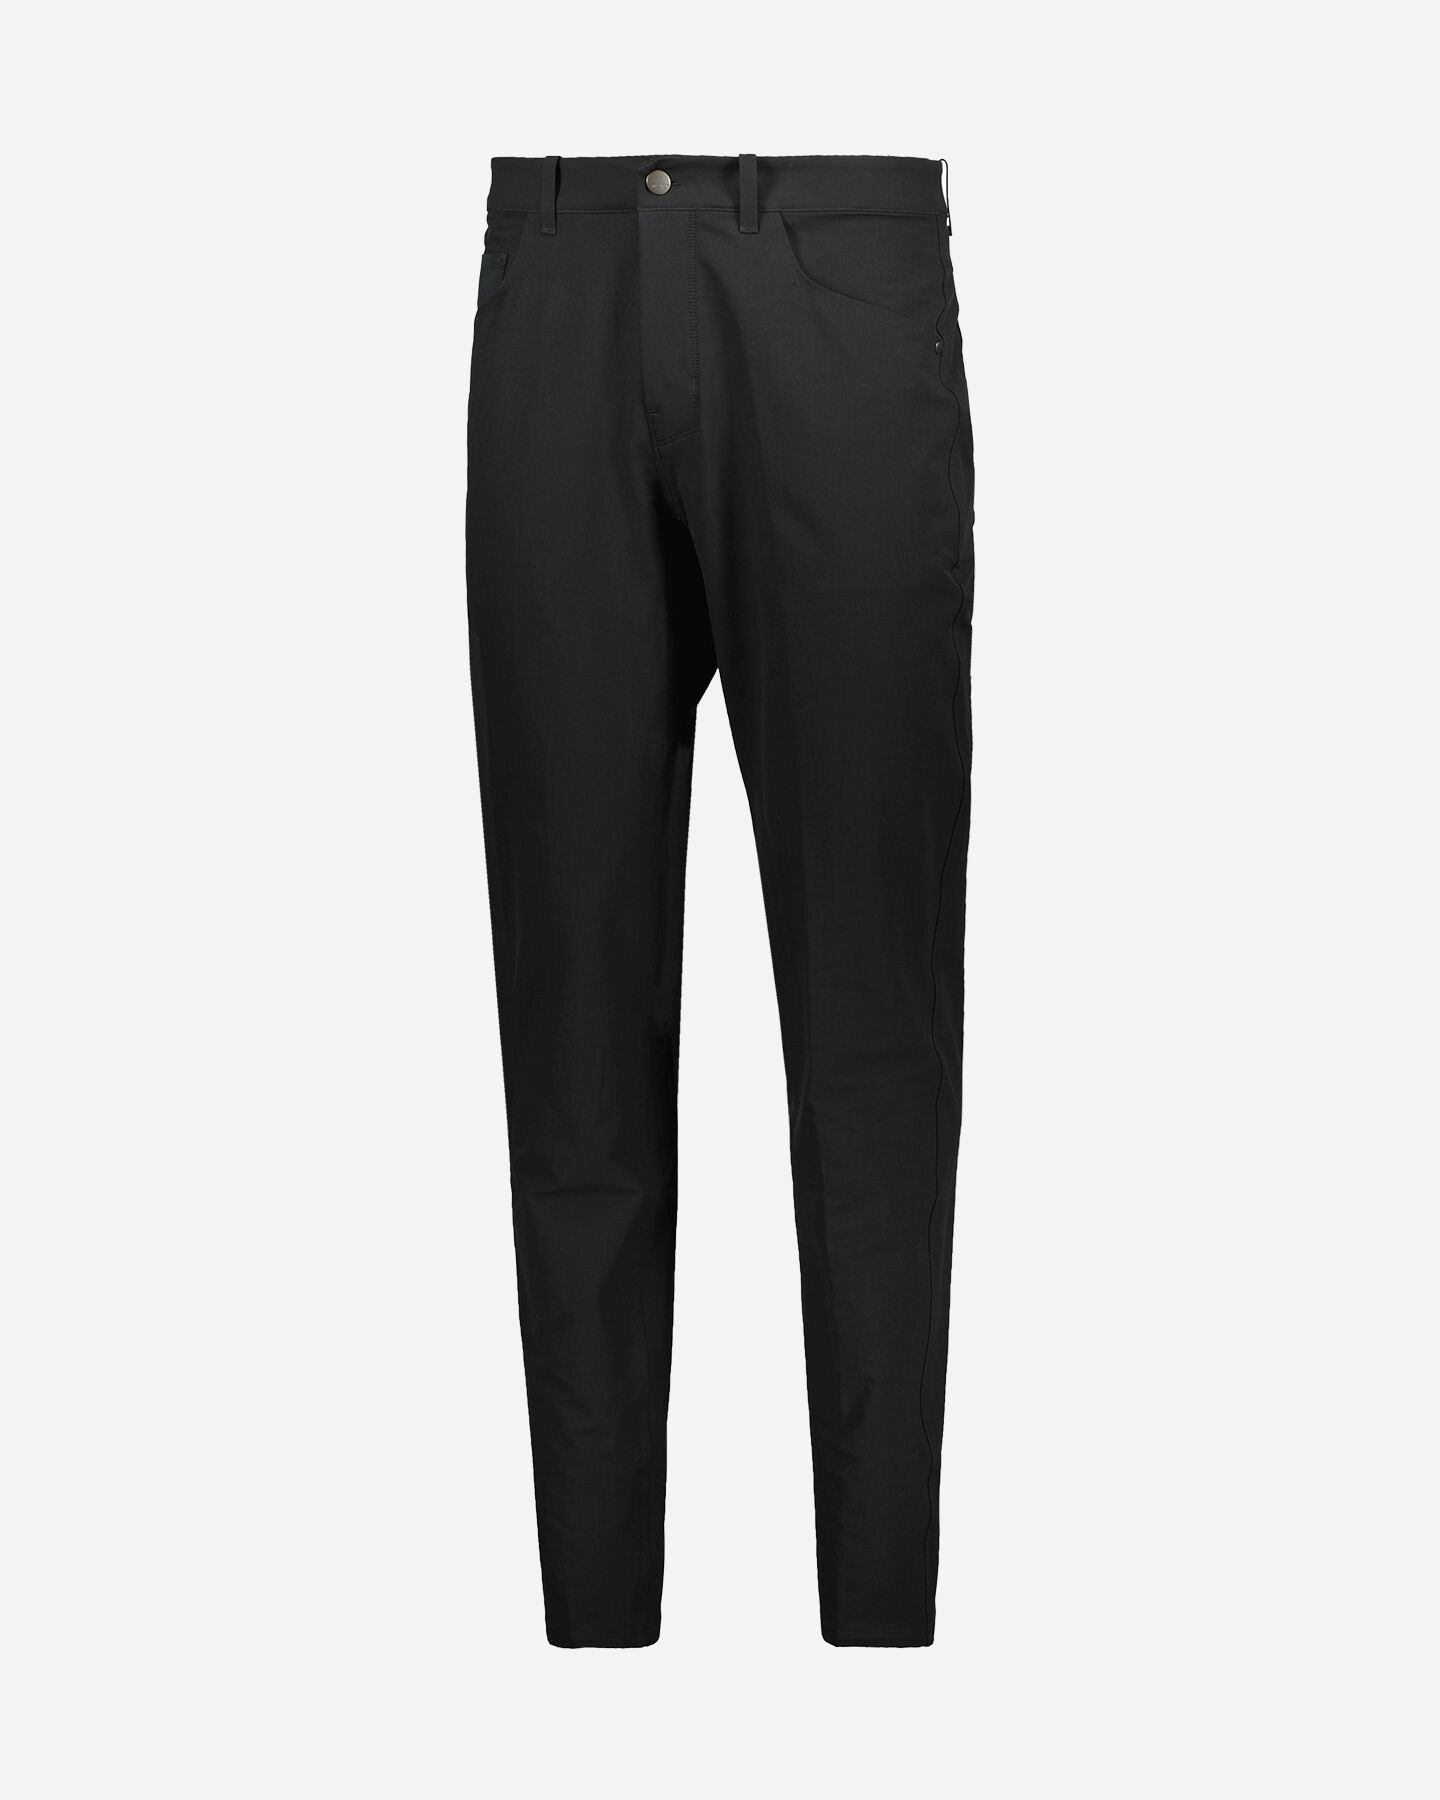  Pantalone outdoor ARC'TERYX LEVON M S4114882|1|34-R scatto 0